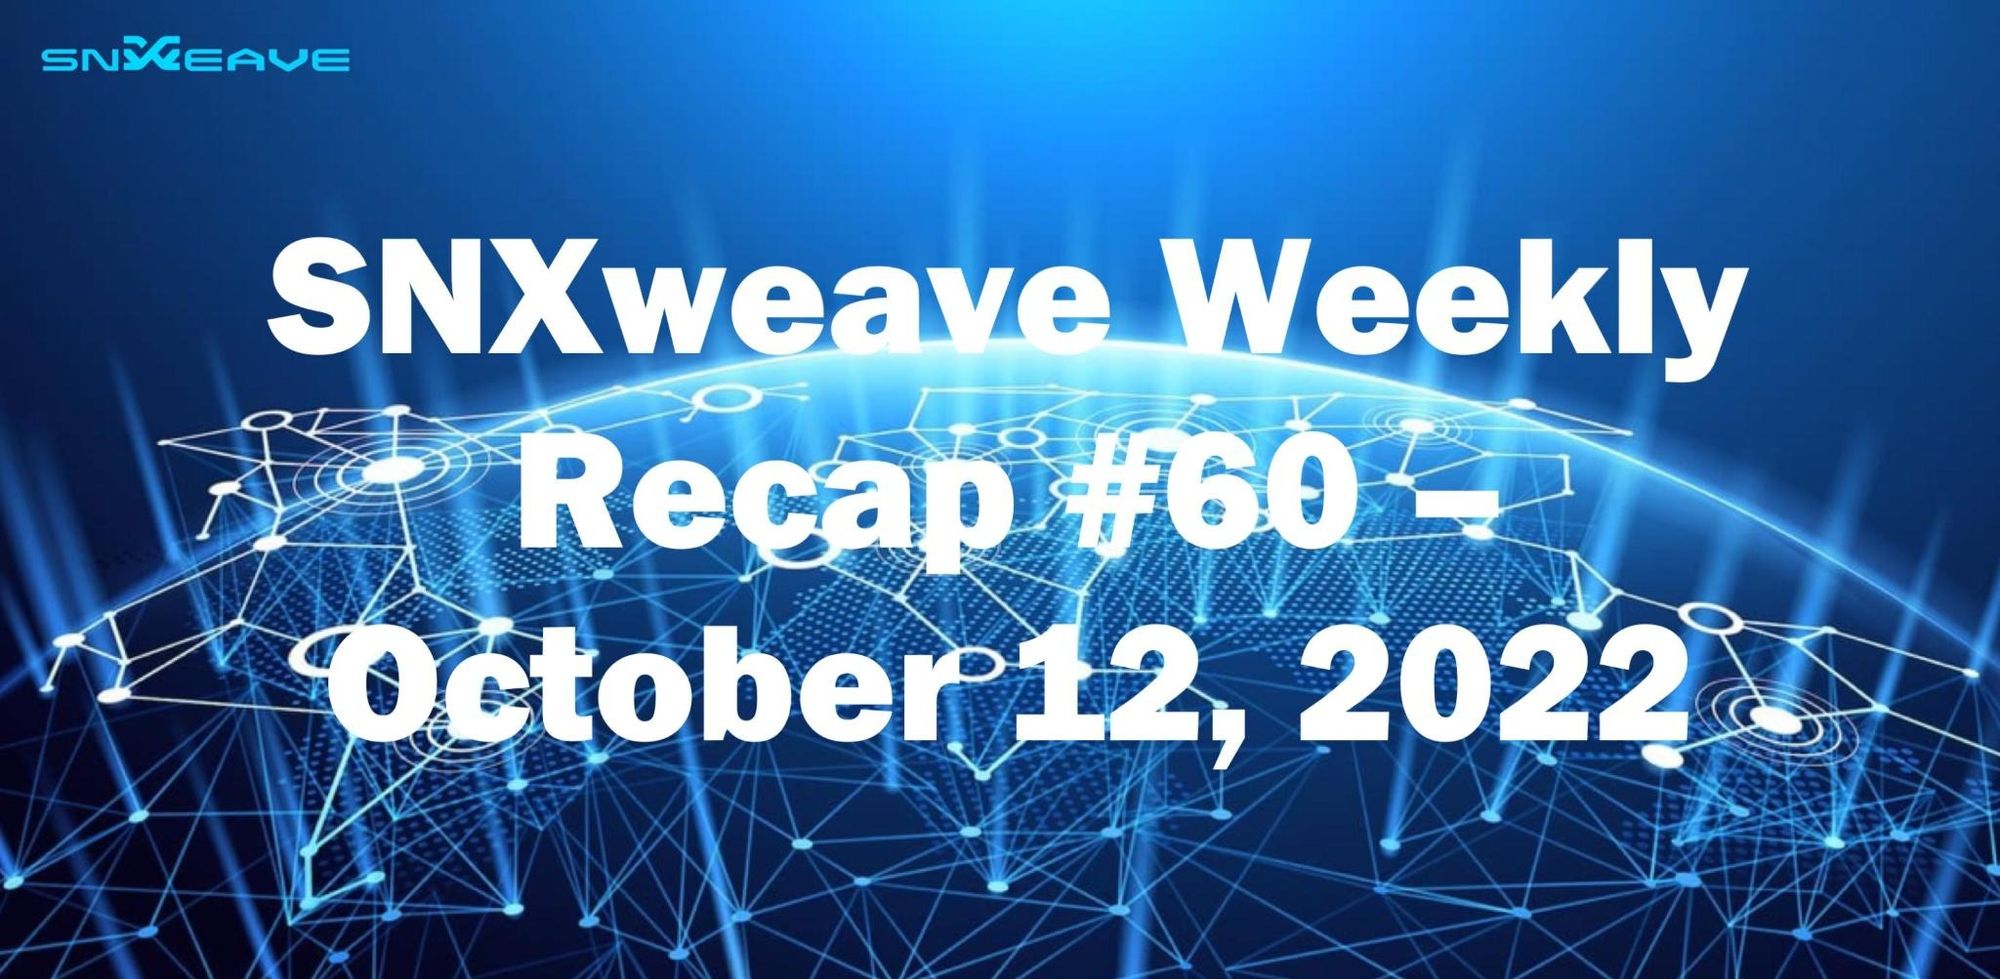 SNXweave Weekly Recap 60